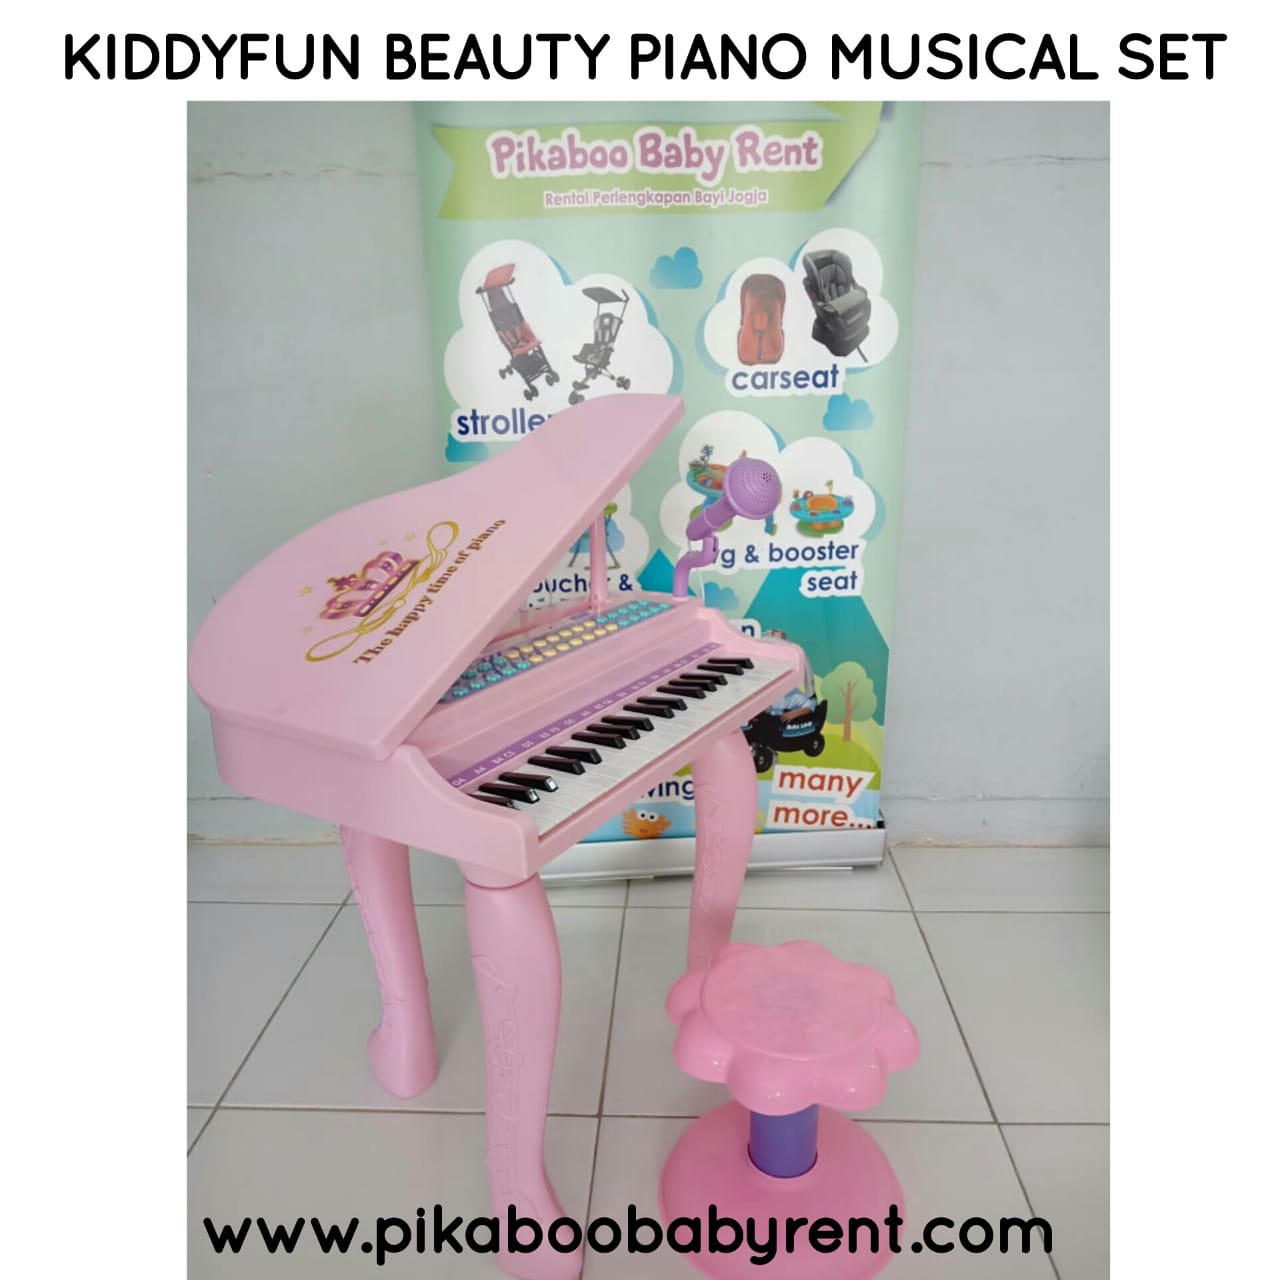 KIDDY FUN BEAUTY PIANO MUSICAL SET